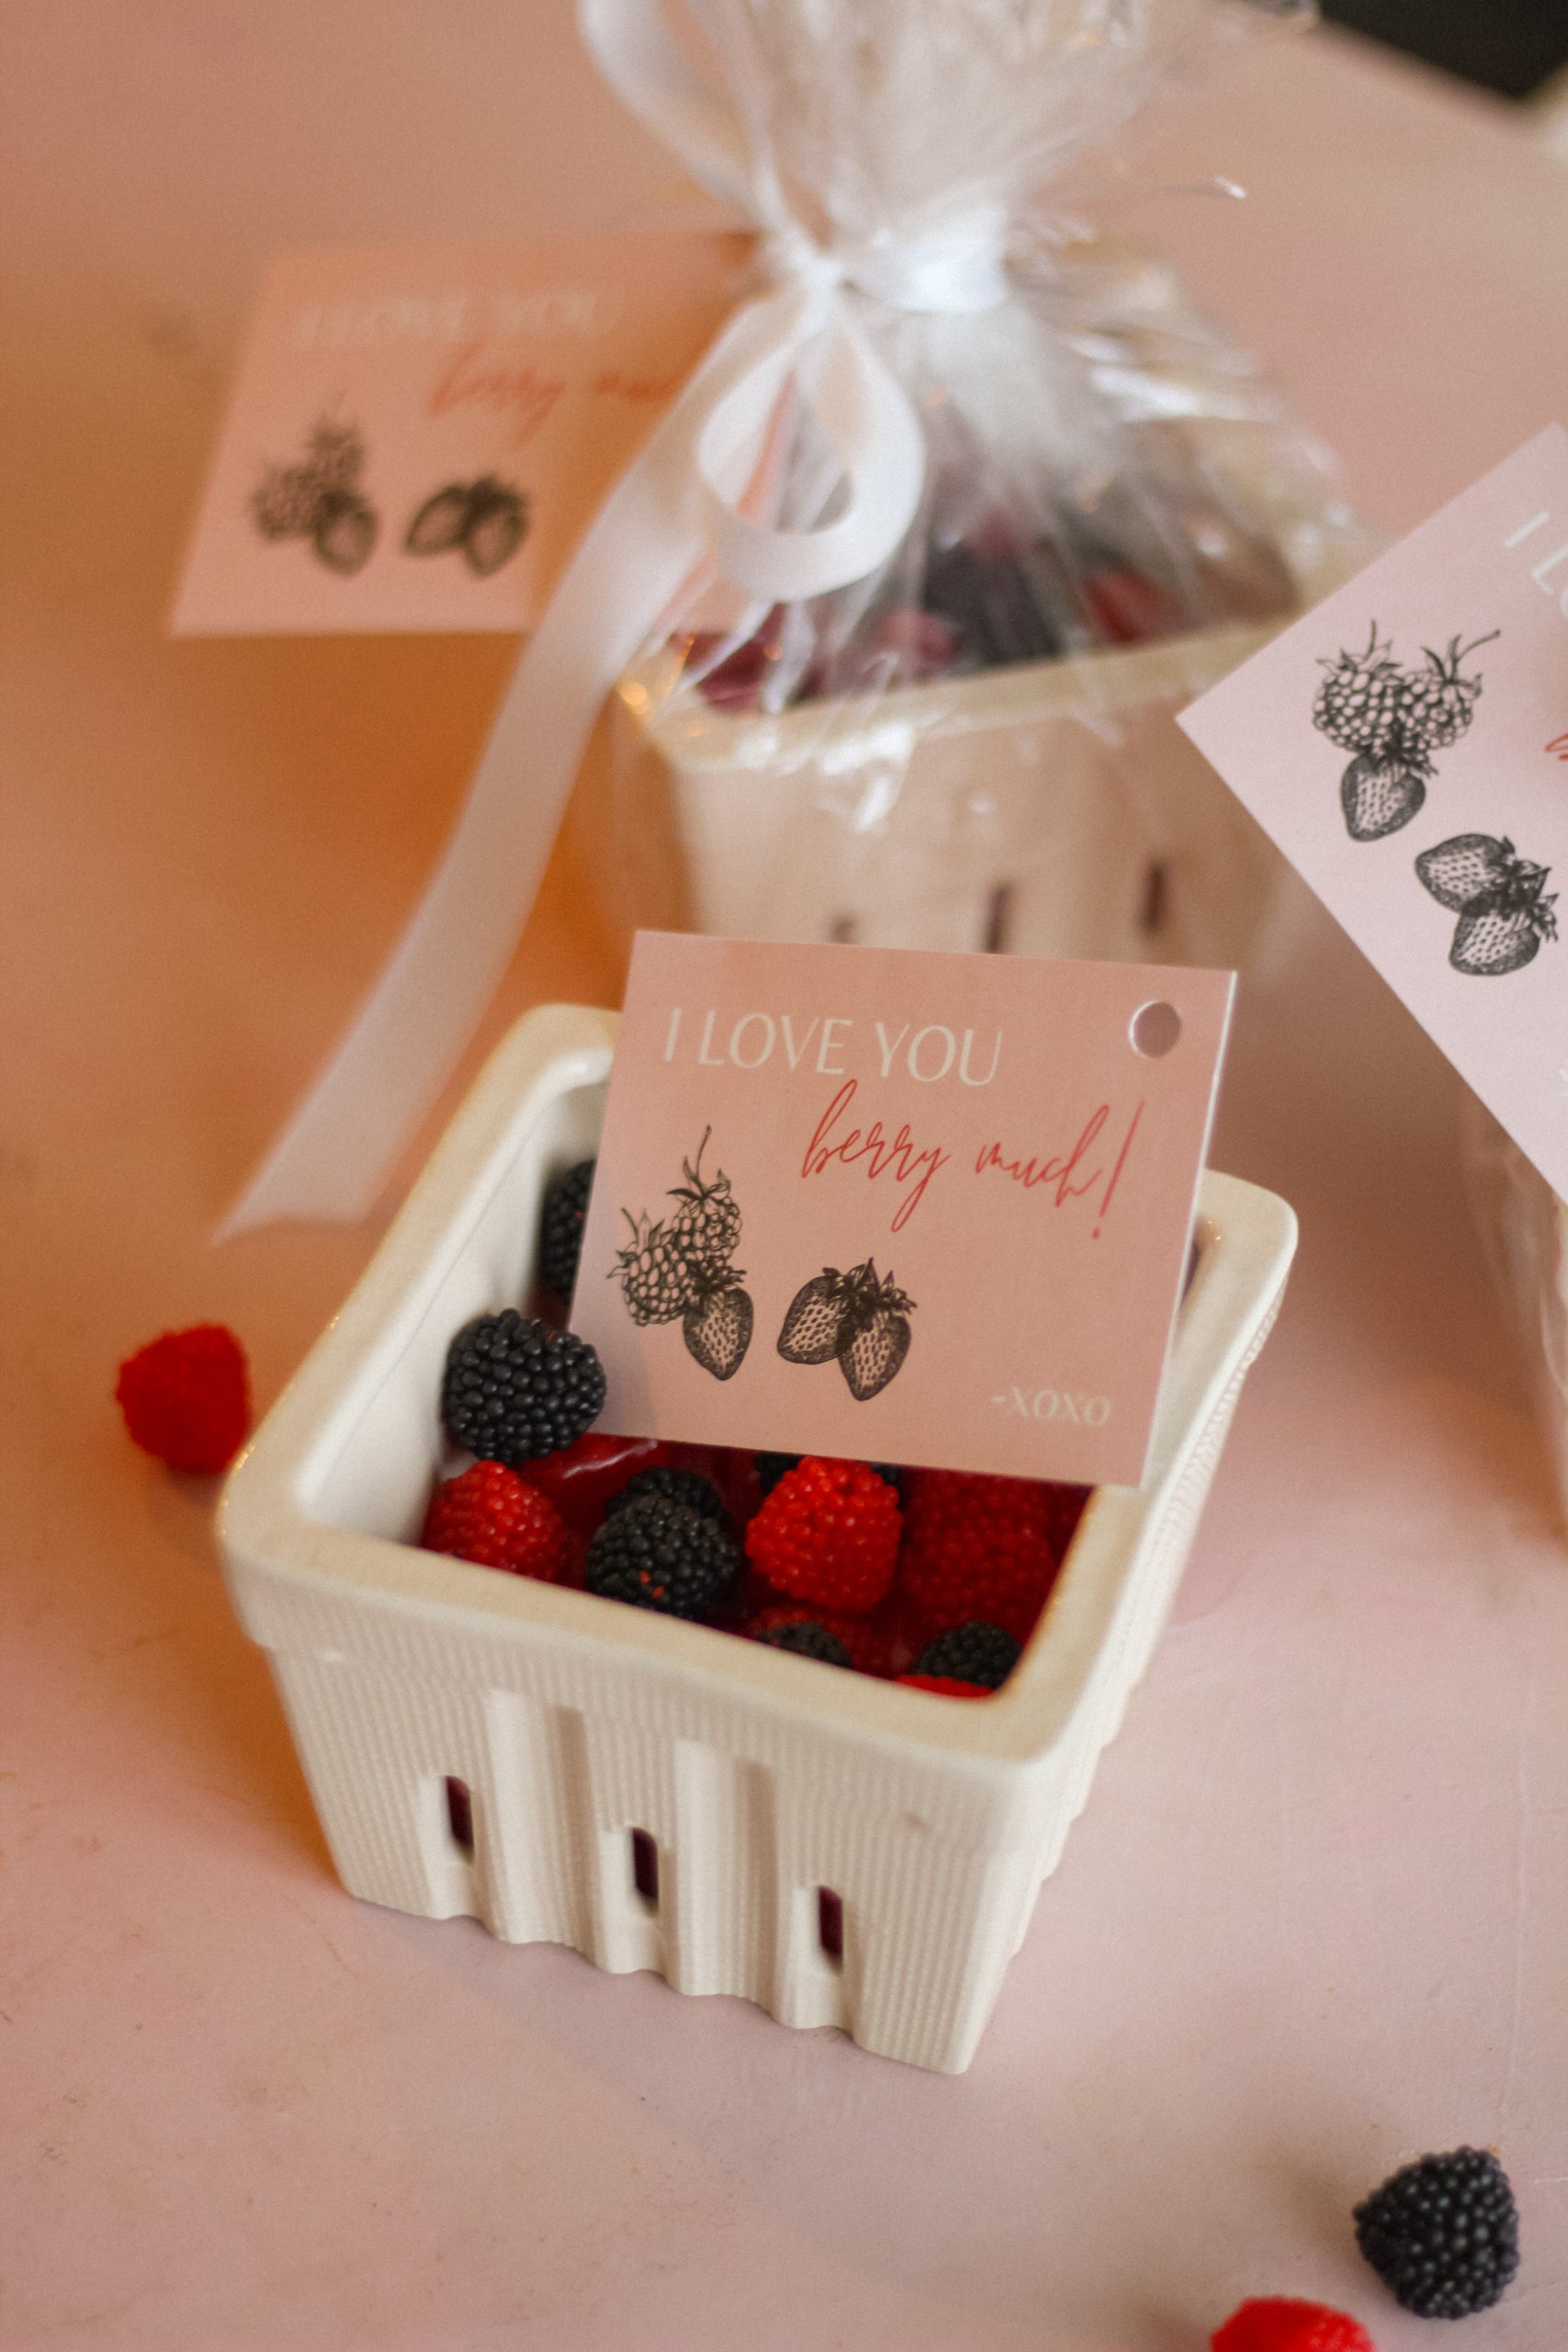 DIY Valentine’s Day Berry Bowl Gift 